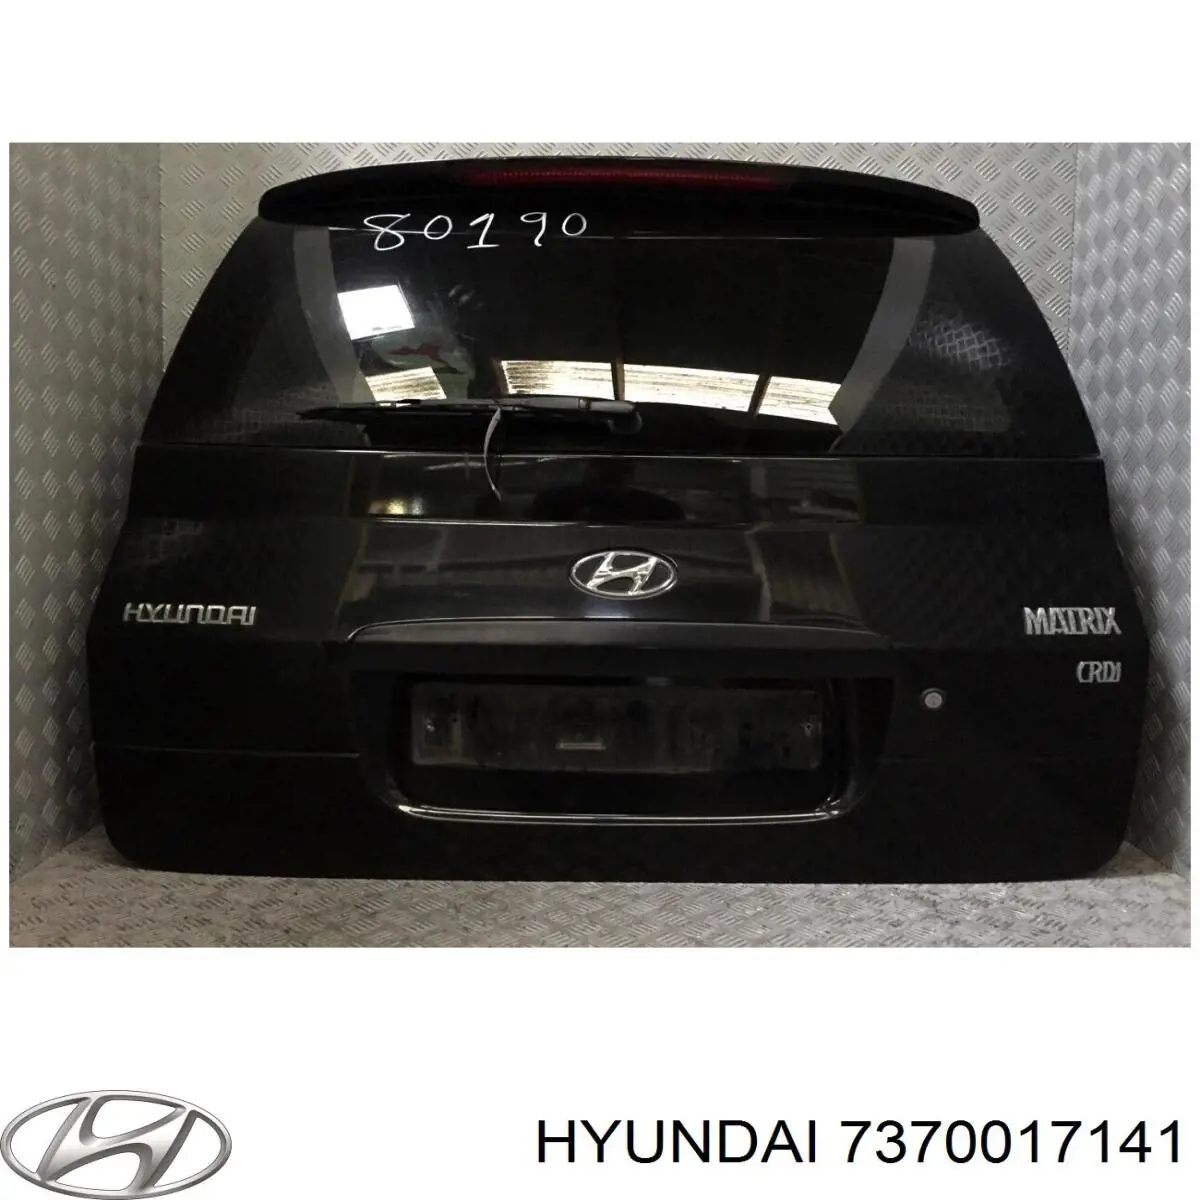 7370017141 Hyundai/Kia puerta del maletero, trasera